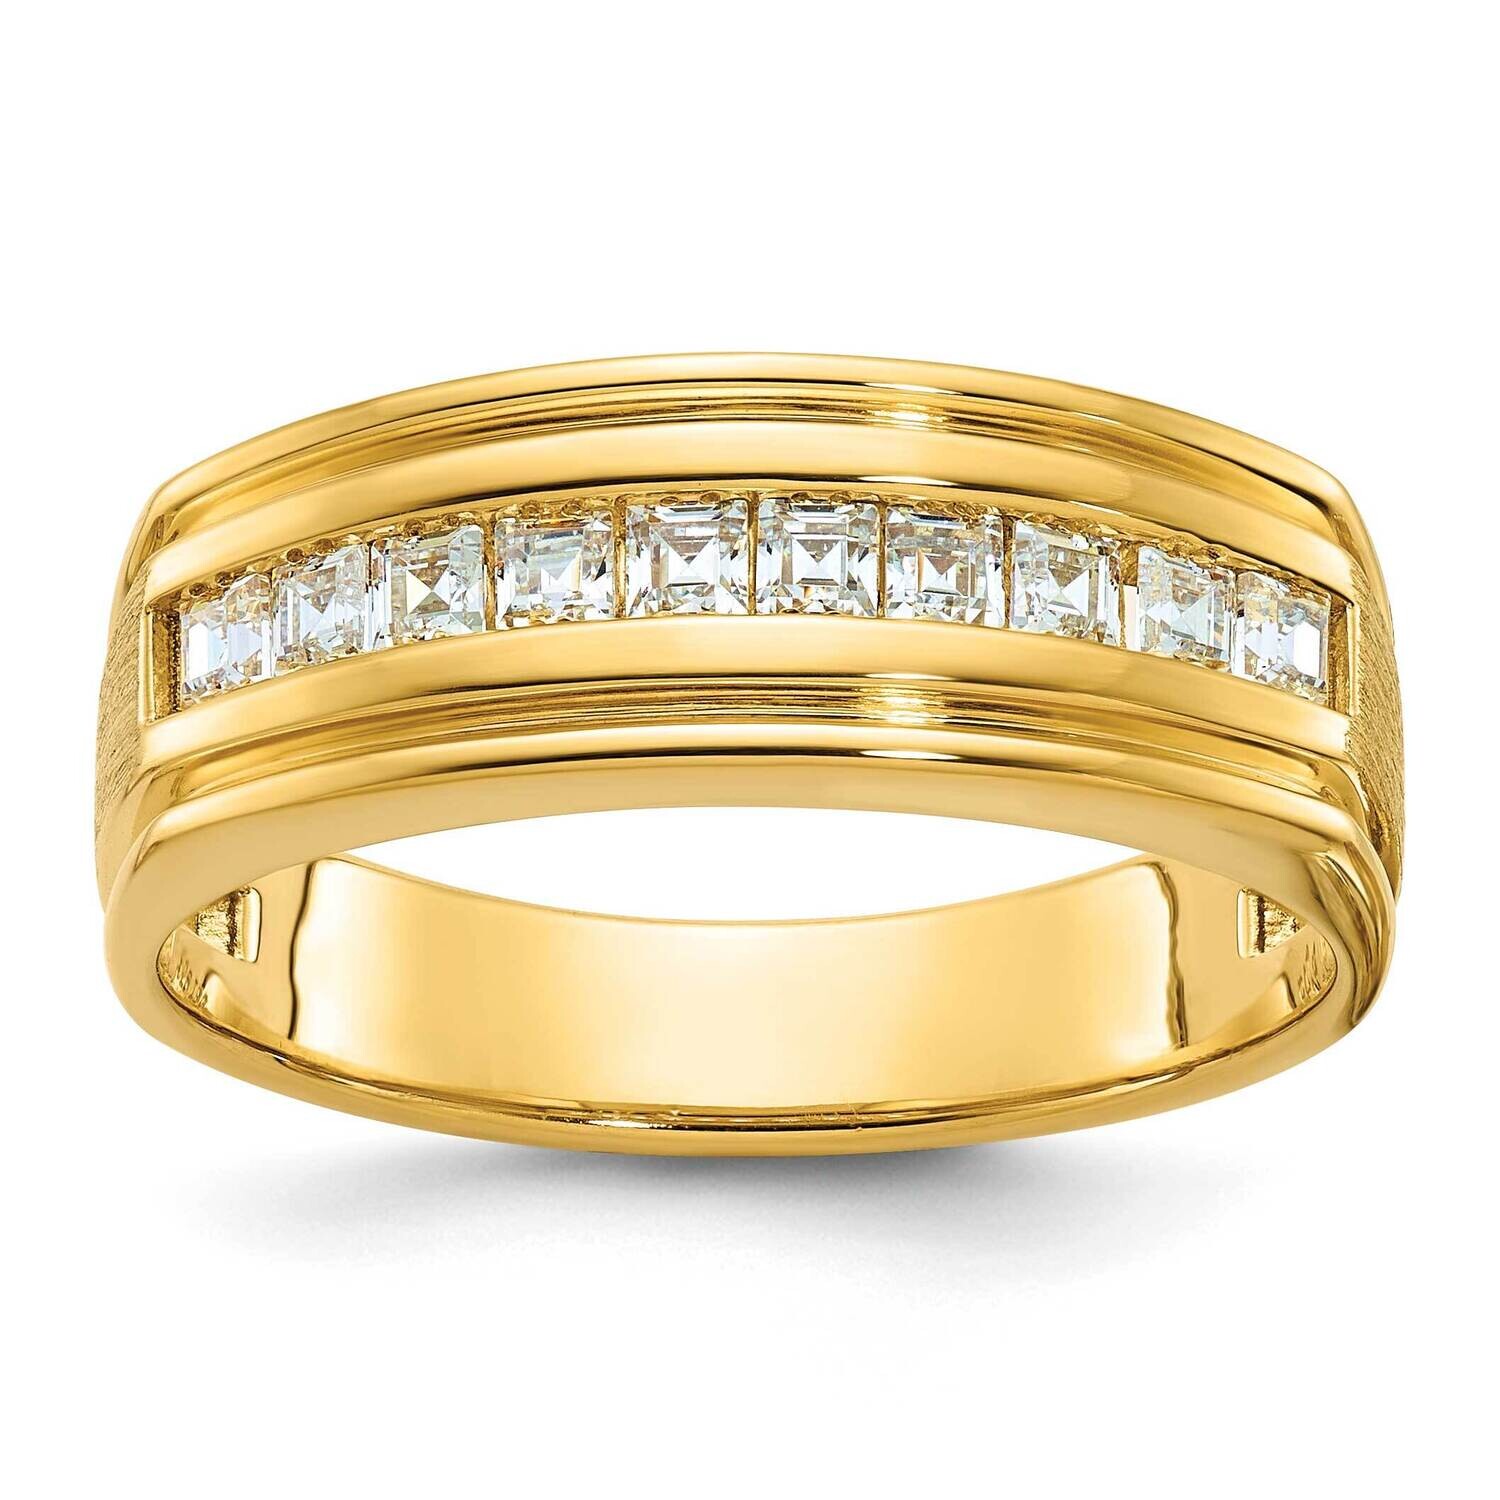 Ibgoodman Men's Polished Satin Square 10-Stone 1/2 Carat Aa Quality Diamond Ring 14k Gold B64291-4YAA